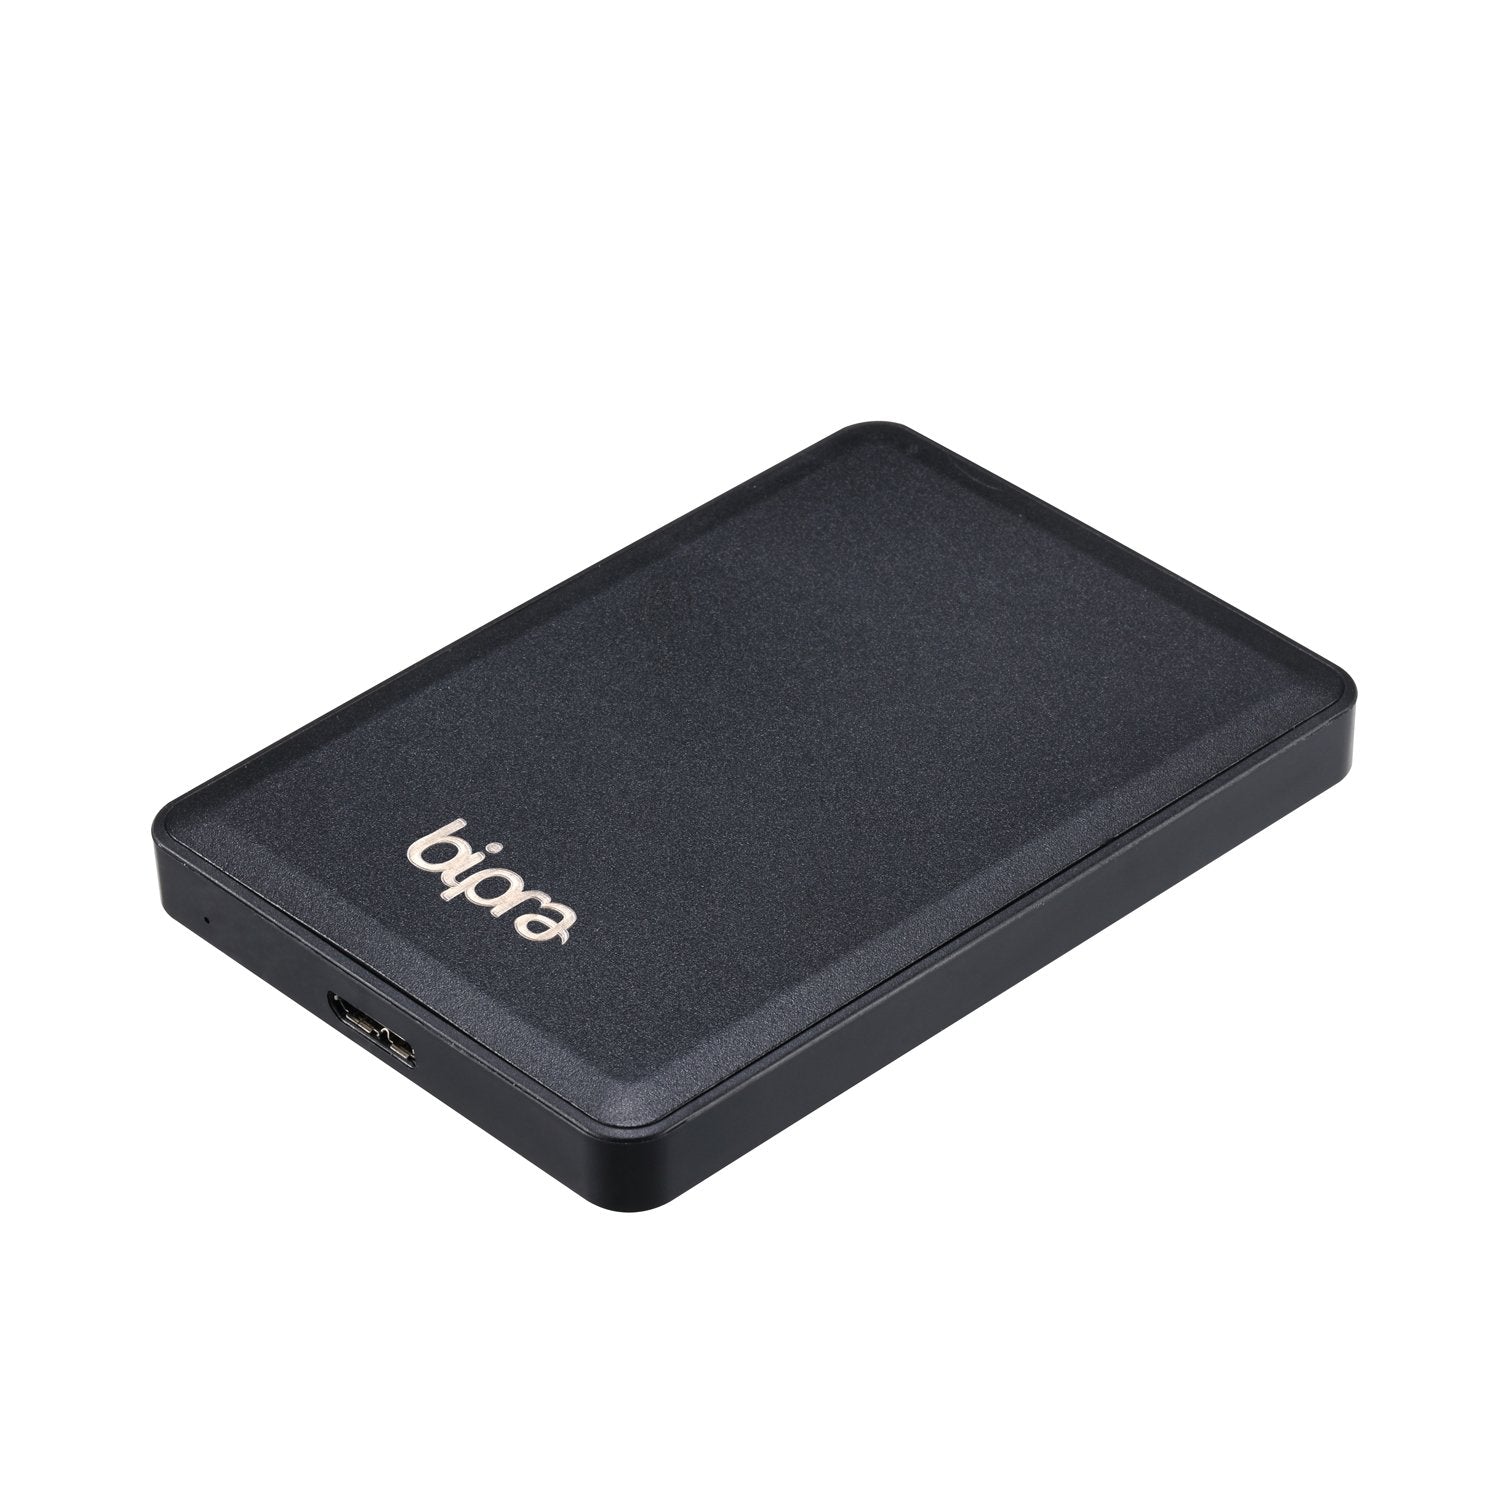 Bipra S3 2.5 inch USB 3.0 NTFS Portable External Hard Drive - Black (500GB)